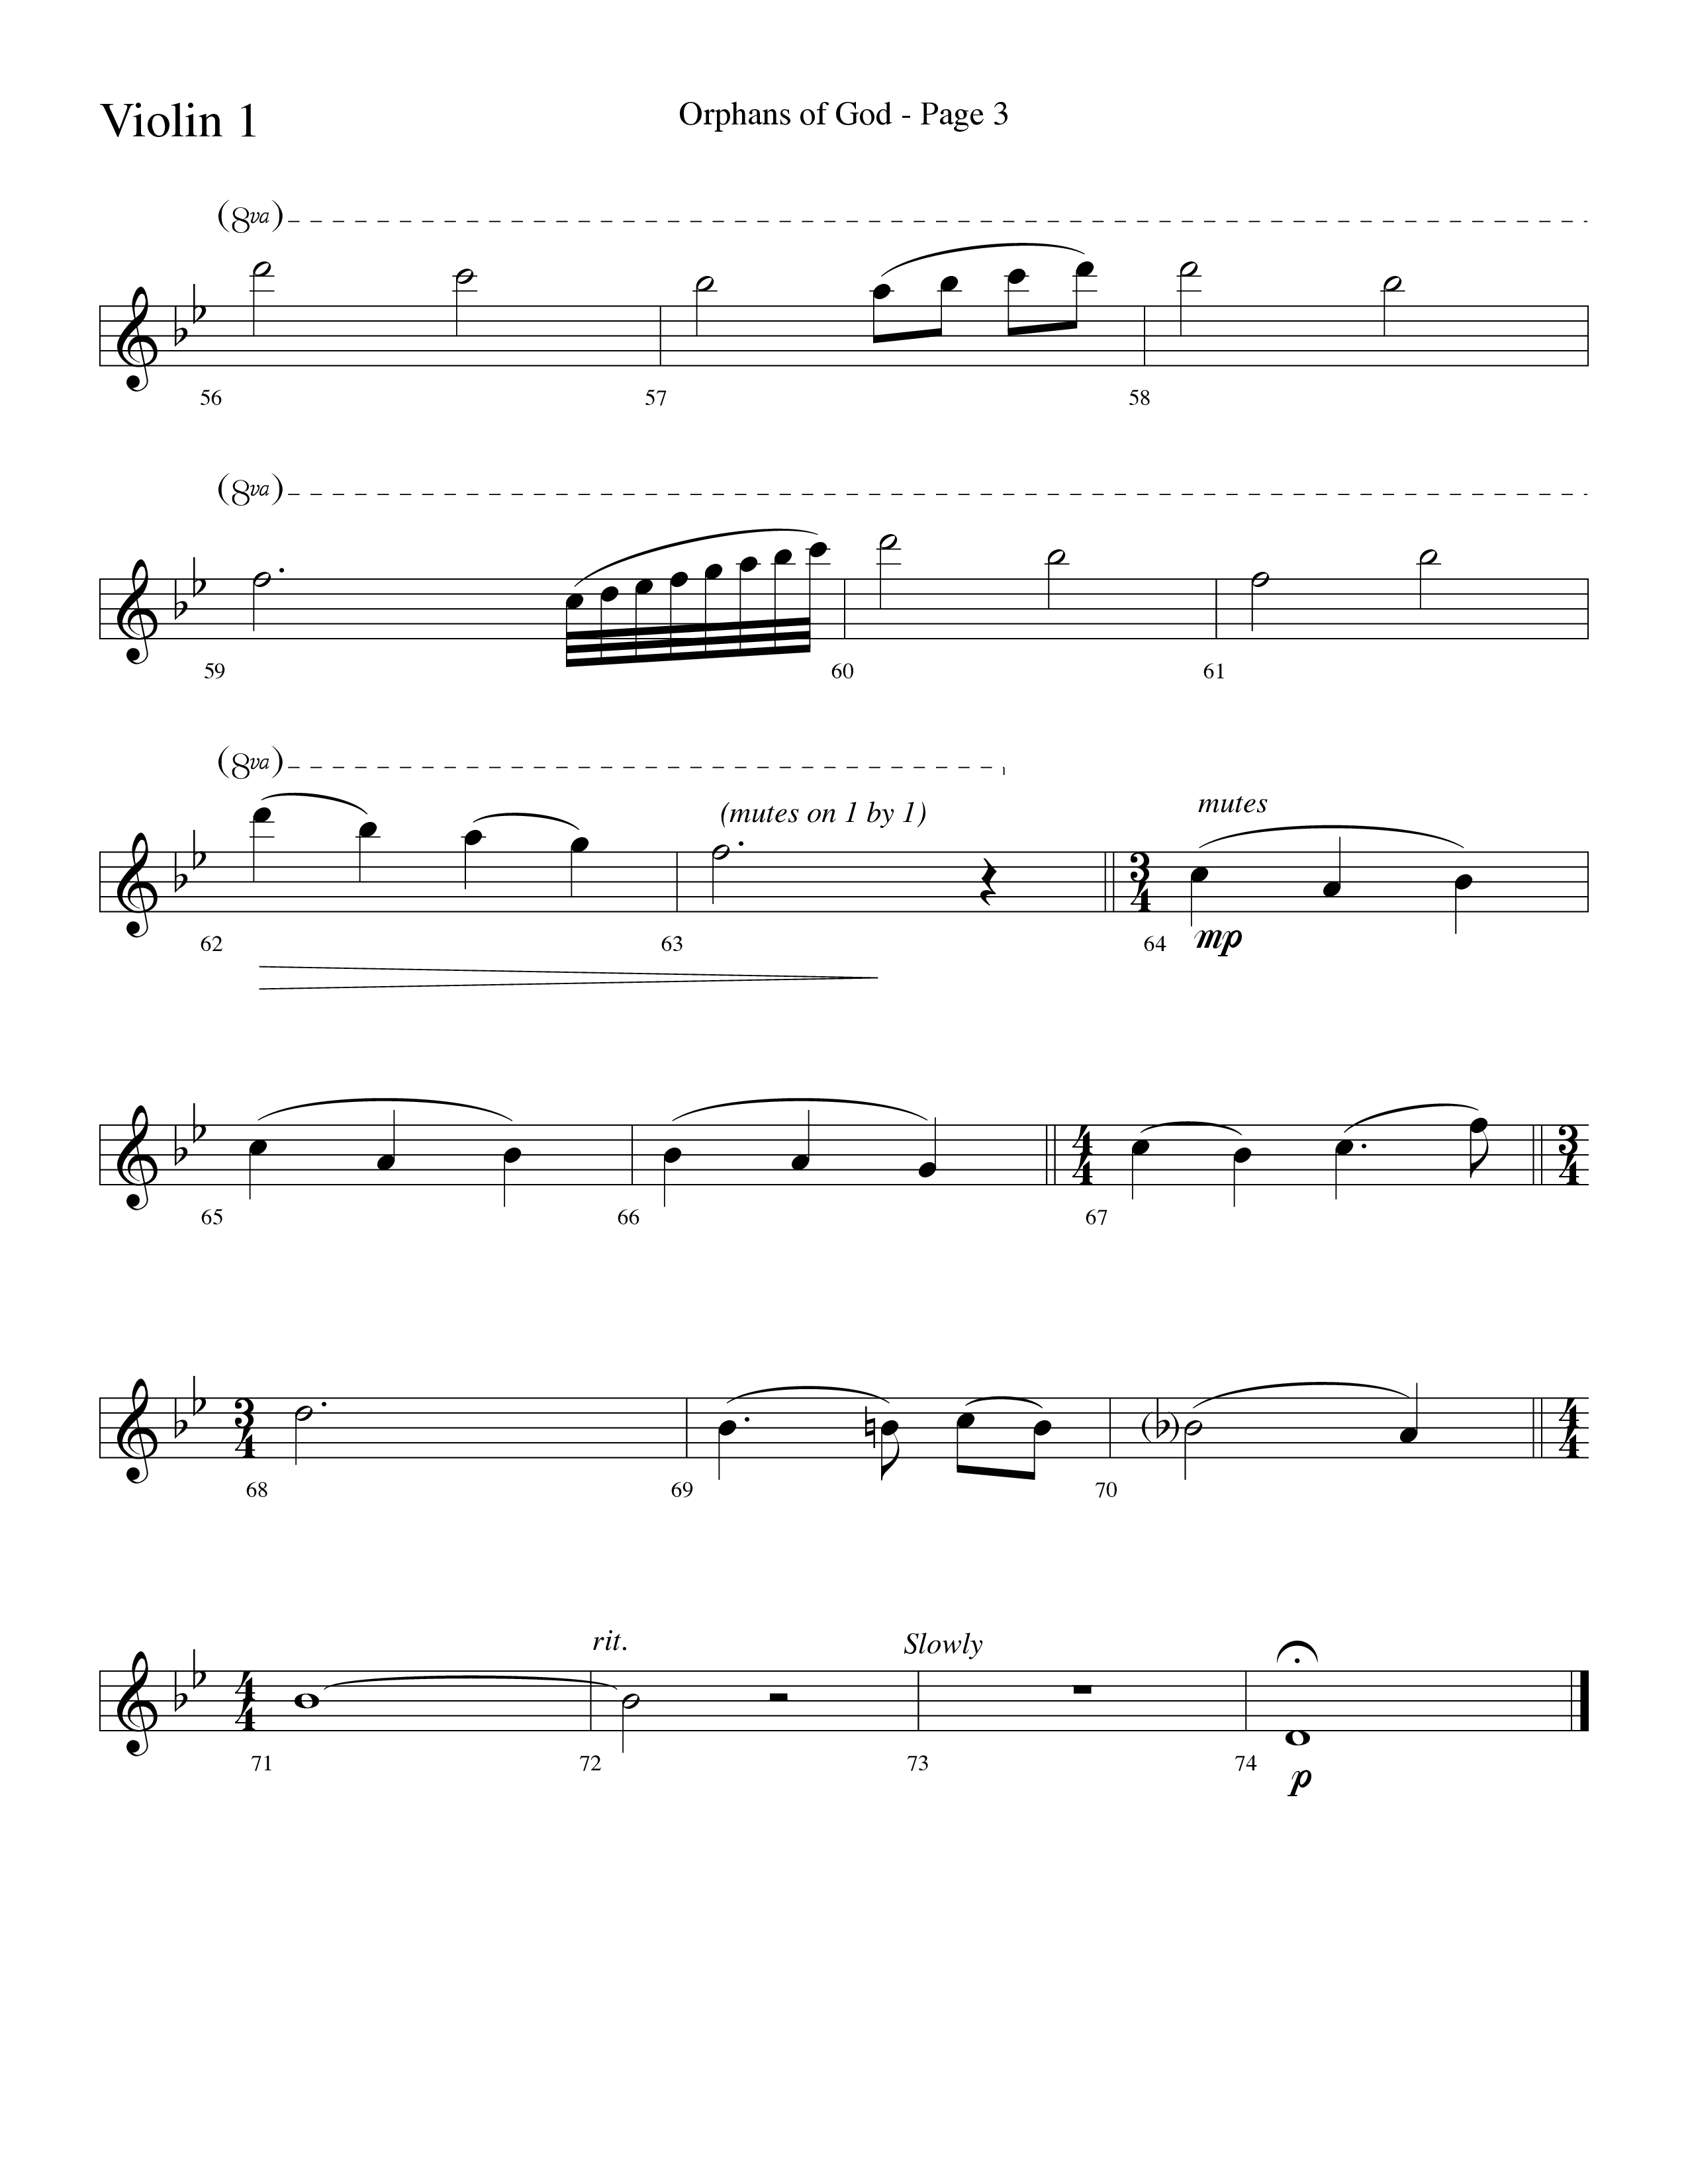 Orphans Of God (Choral Anthem SATB) Violin 1 (Lifeway Choral / Arr. Dave Williamson)